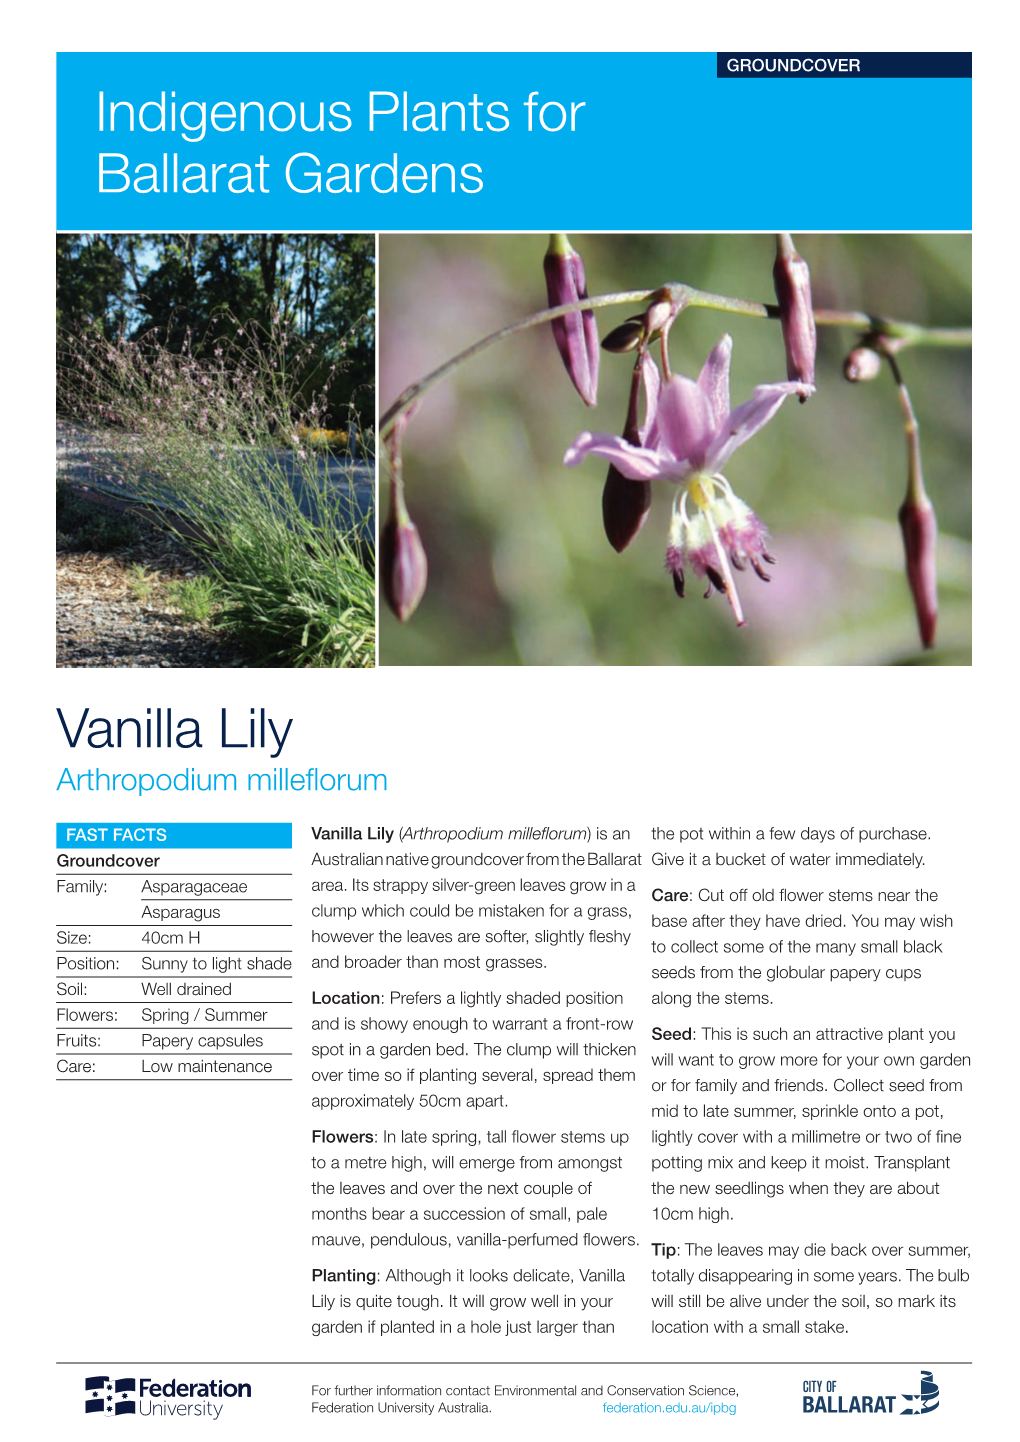 Vanilla Lily Indigenous Plants for Ballarat Gardens